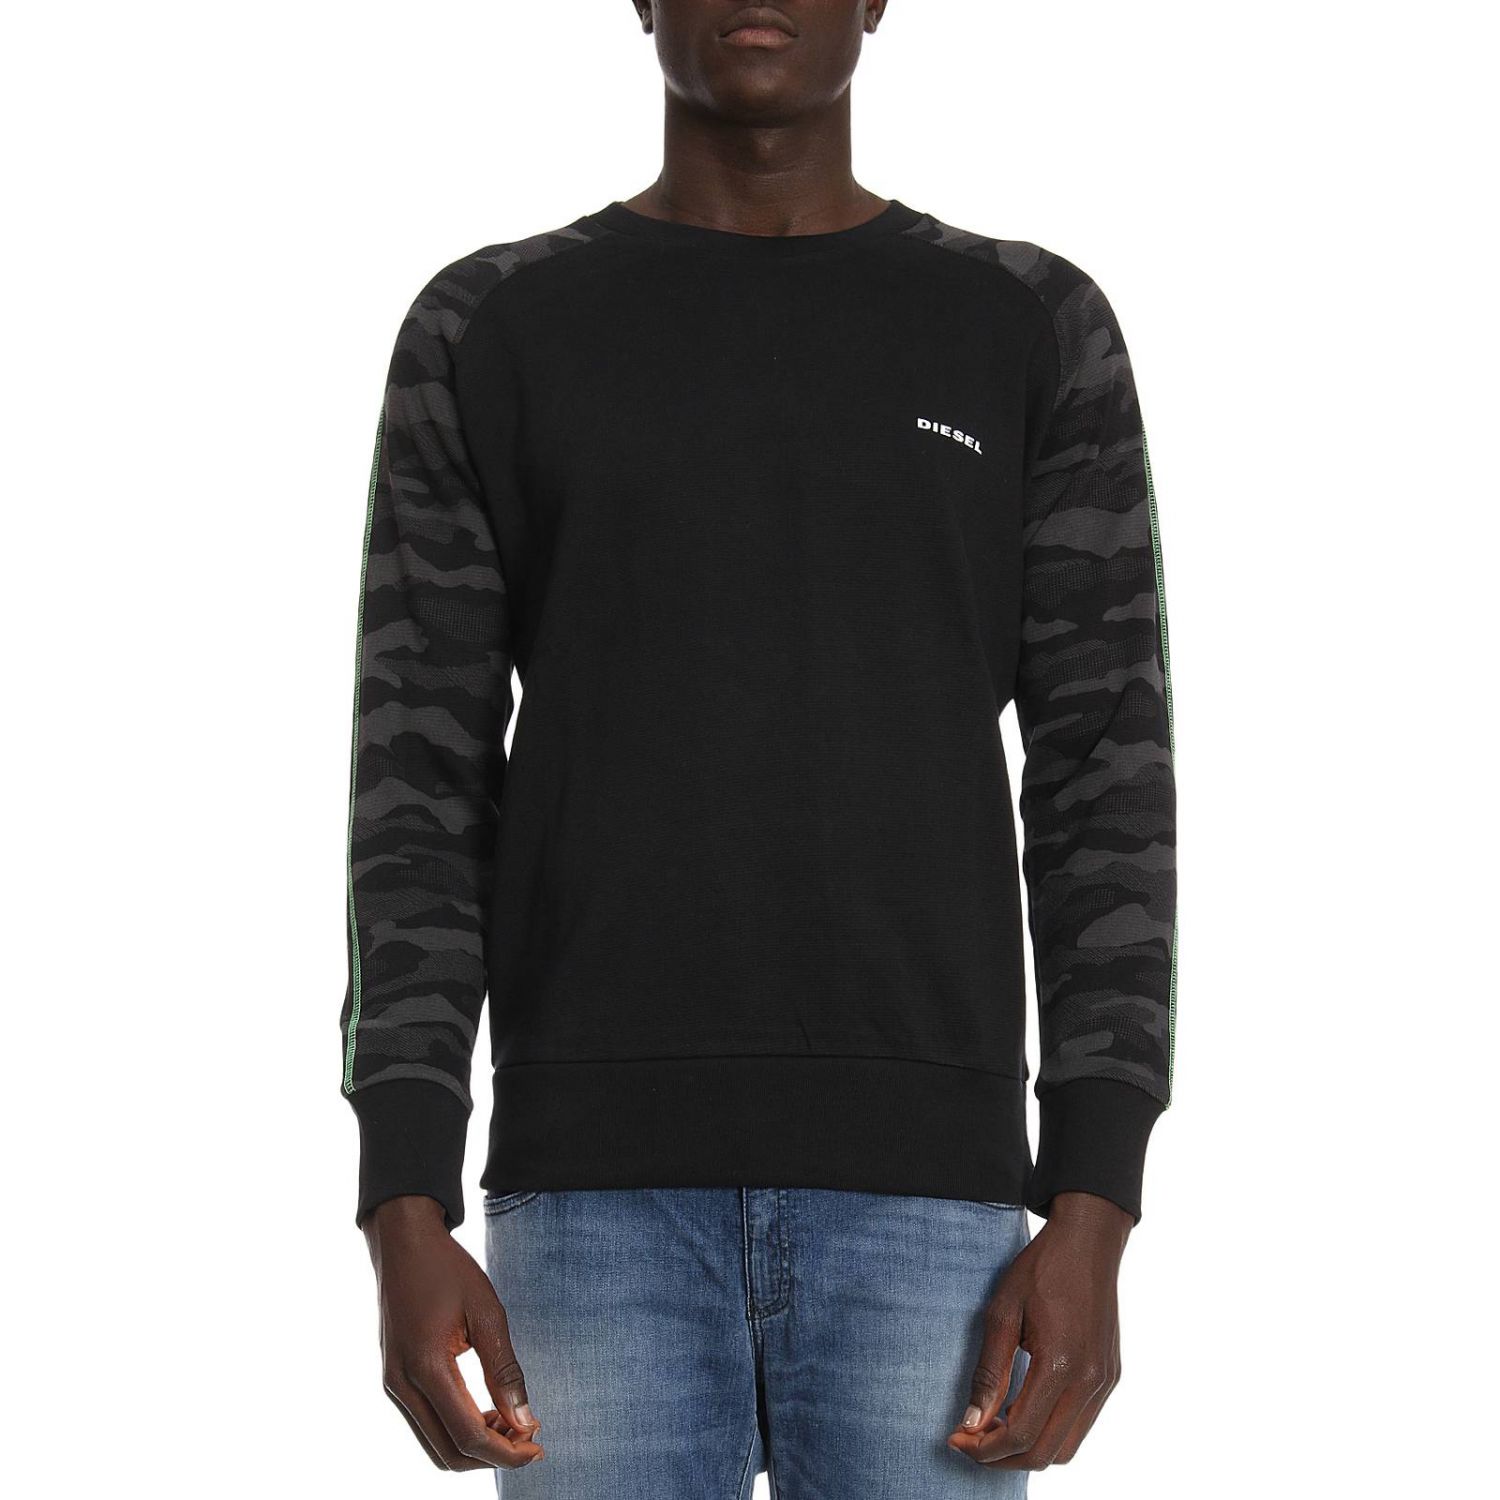 Diesel Outlet: Sweater men - Black | Sweater Diesel 00S4AM 0TARH GIGLIO.COM